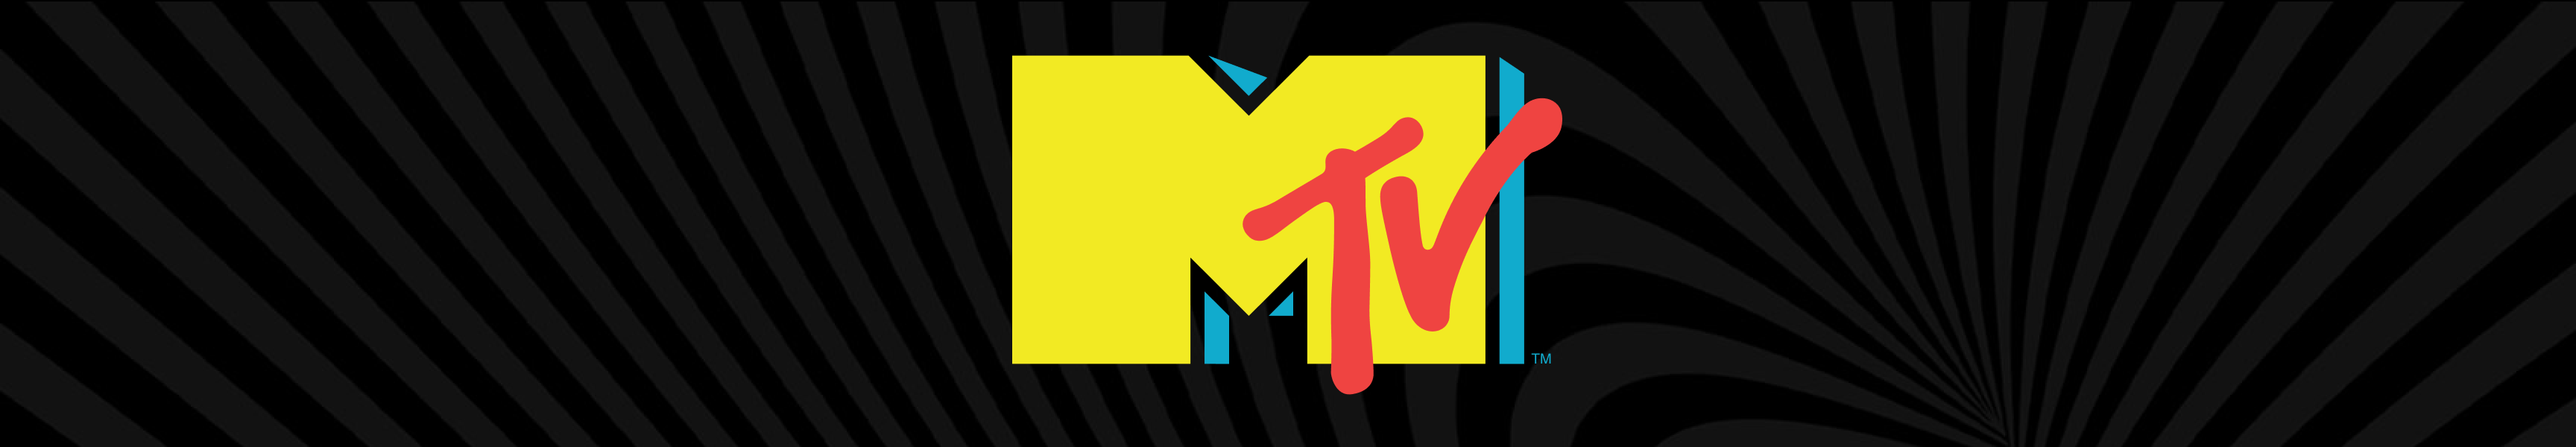 MTV - Top 10 regalos para fans de Wild 'n out